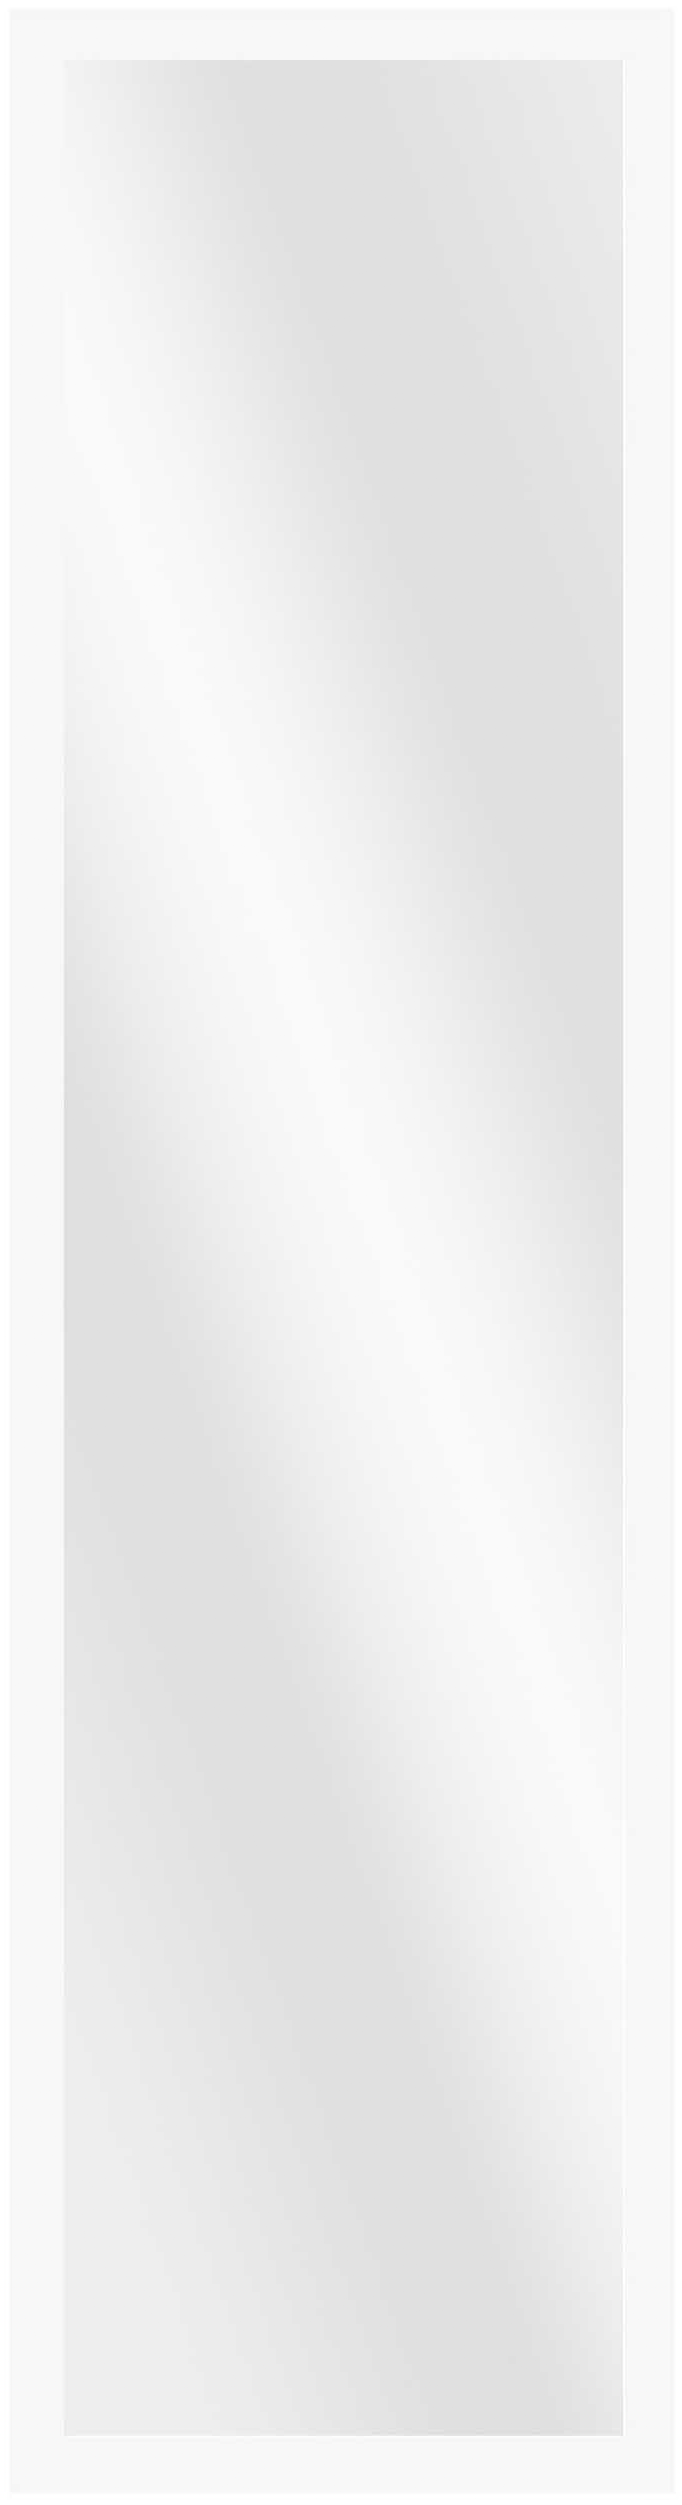 Espejo enmarcado rectangular Puerta negro INSPIRE 120 x 30 cm